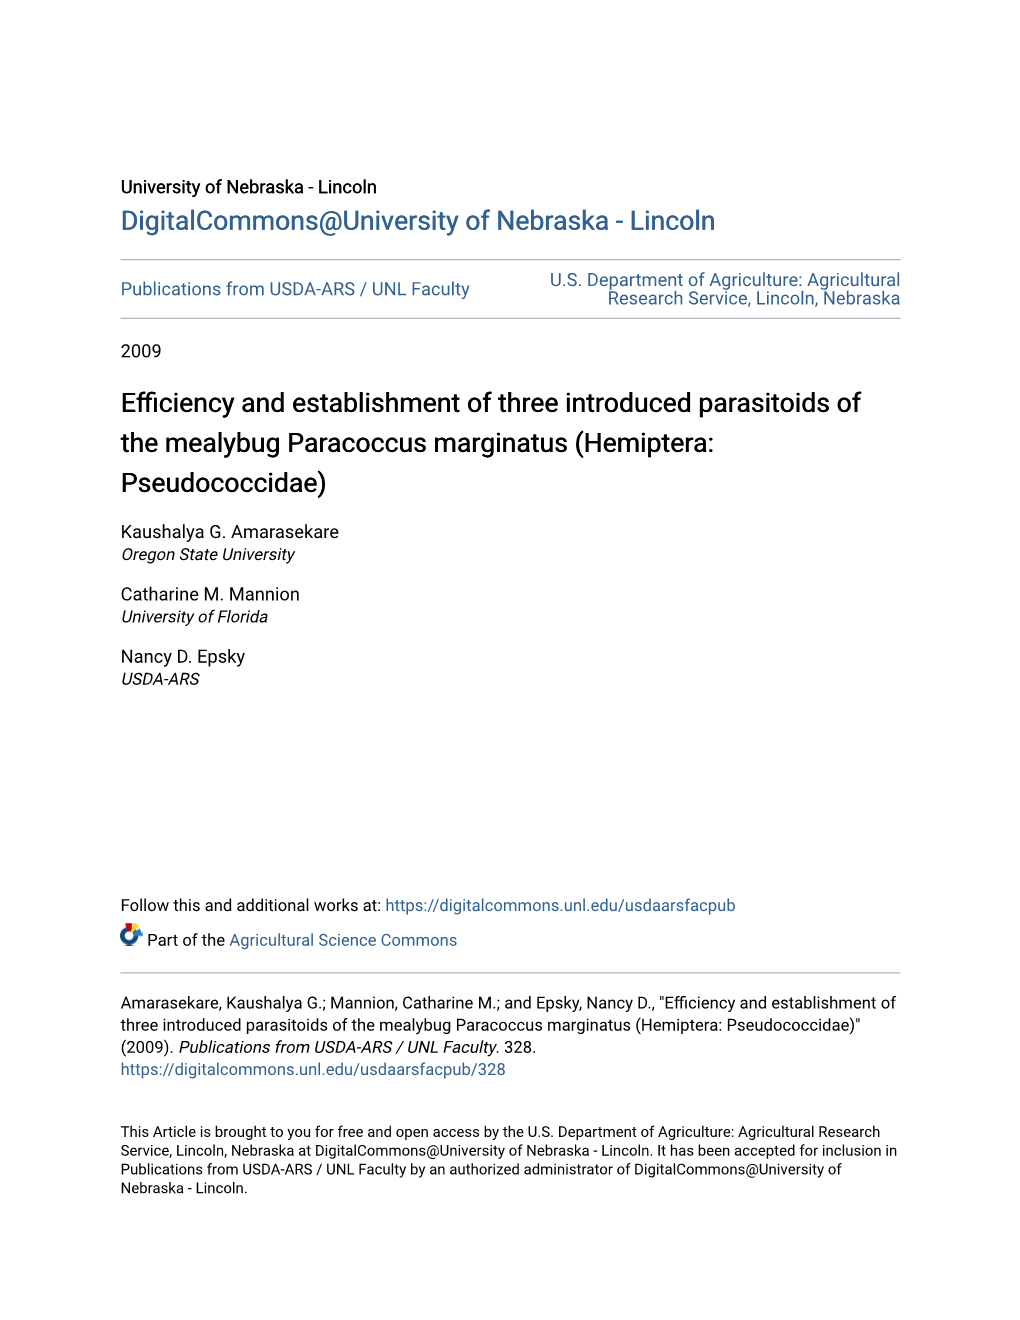 Efficiency and Establishment of Three Introduced Parasitoids of the Mealybug Paracoccus Marginatus (Hemiptera: Pseudococcidae)